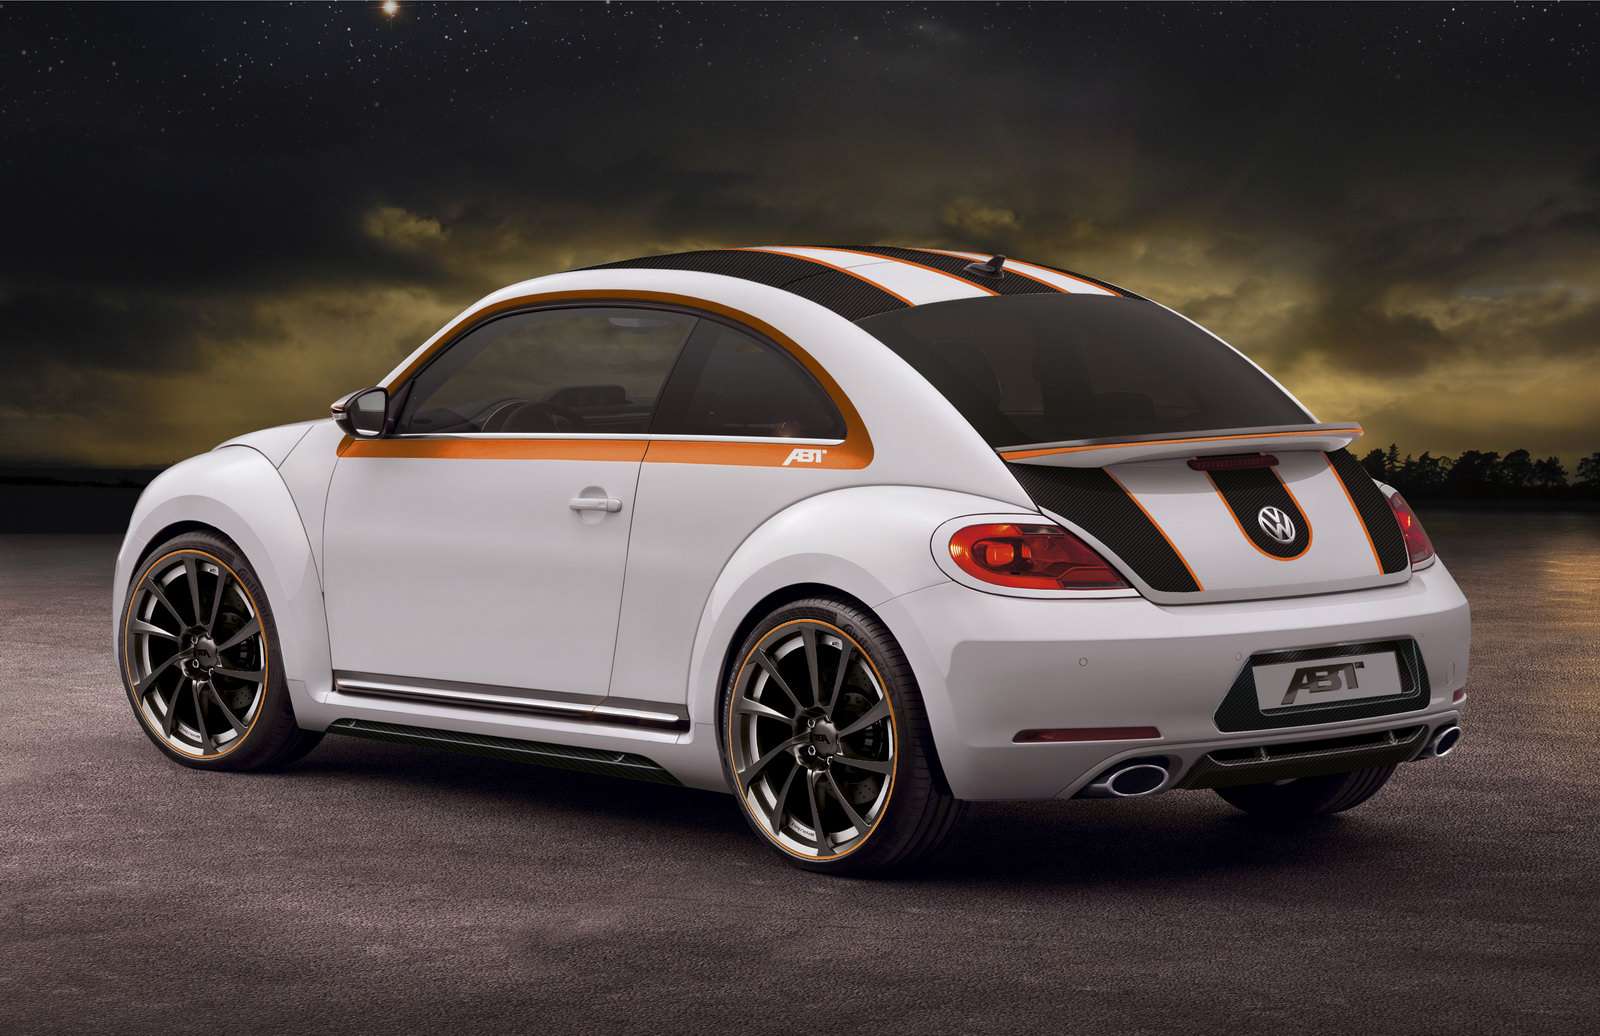 2012 Volkswagen Beetle od firmy ABT [FOT] motofilm.pl